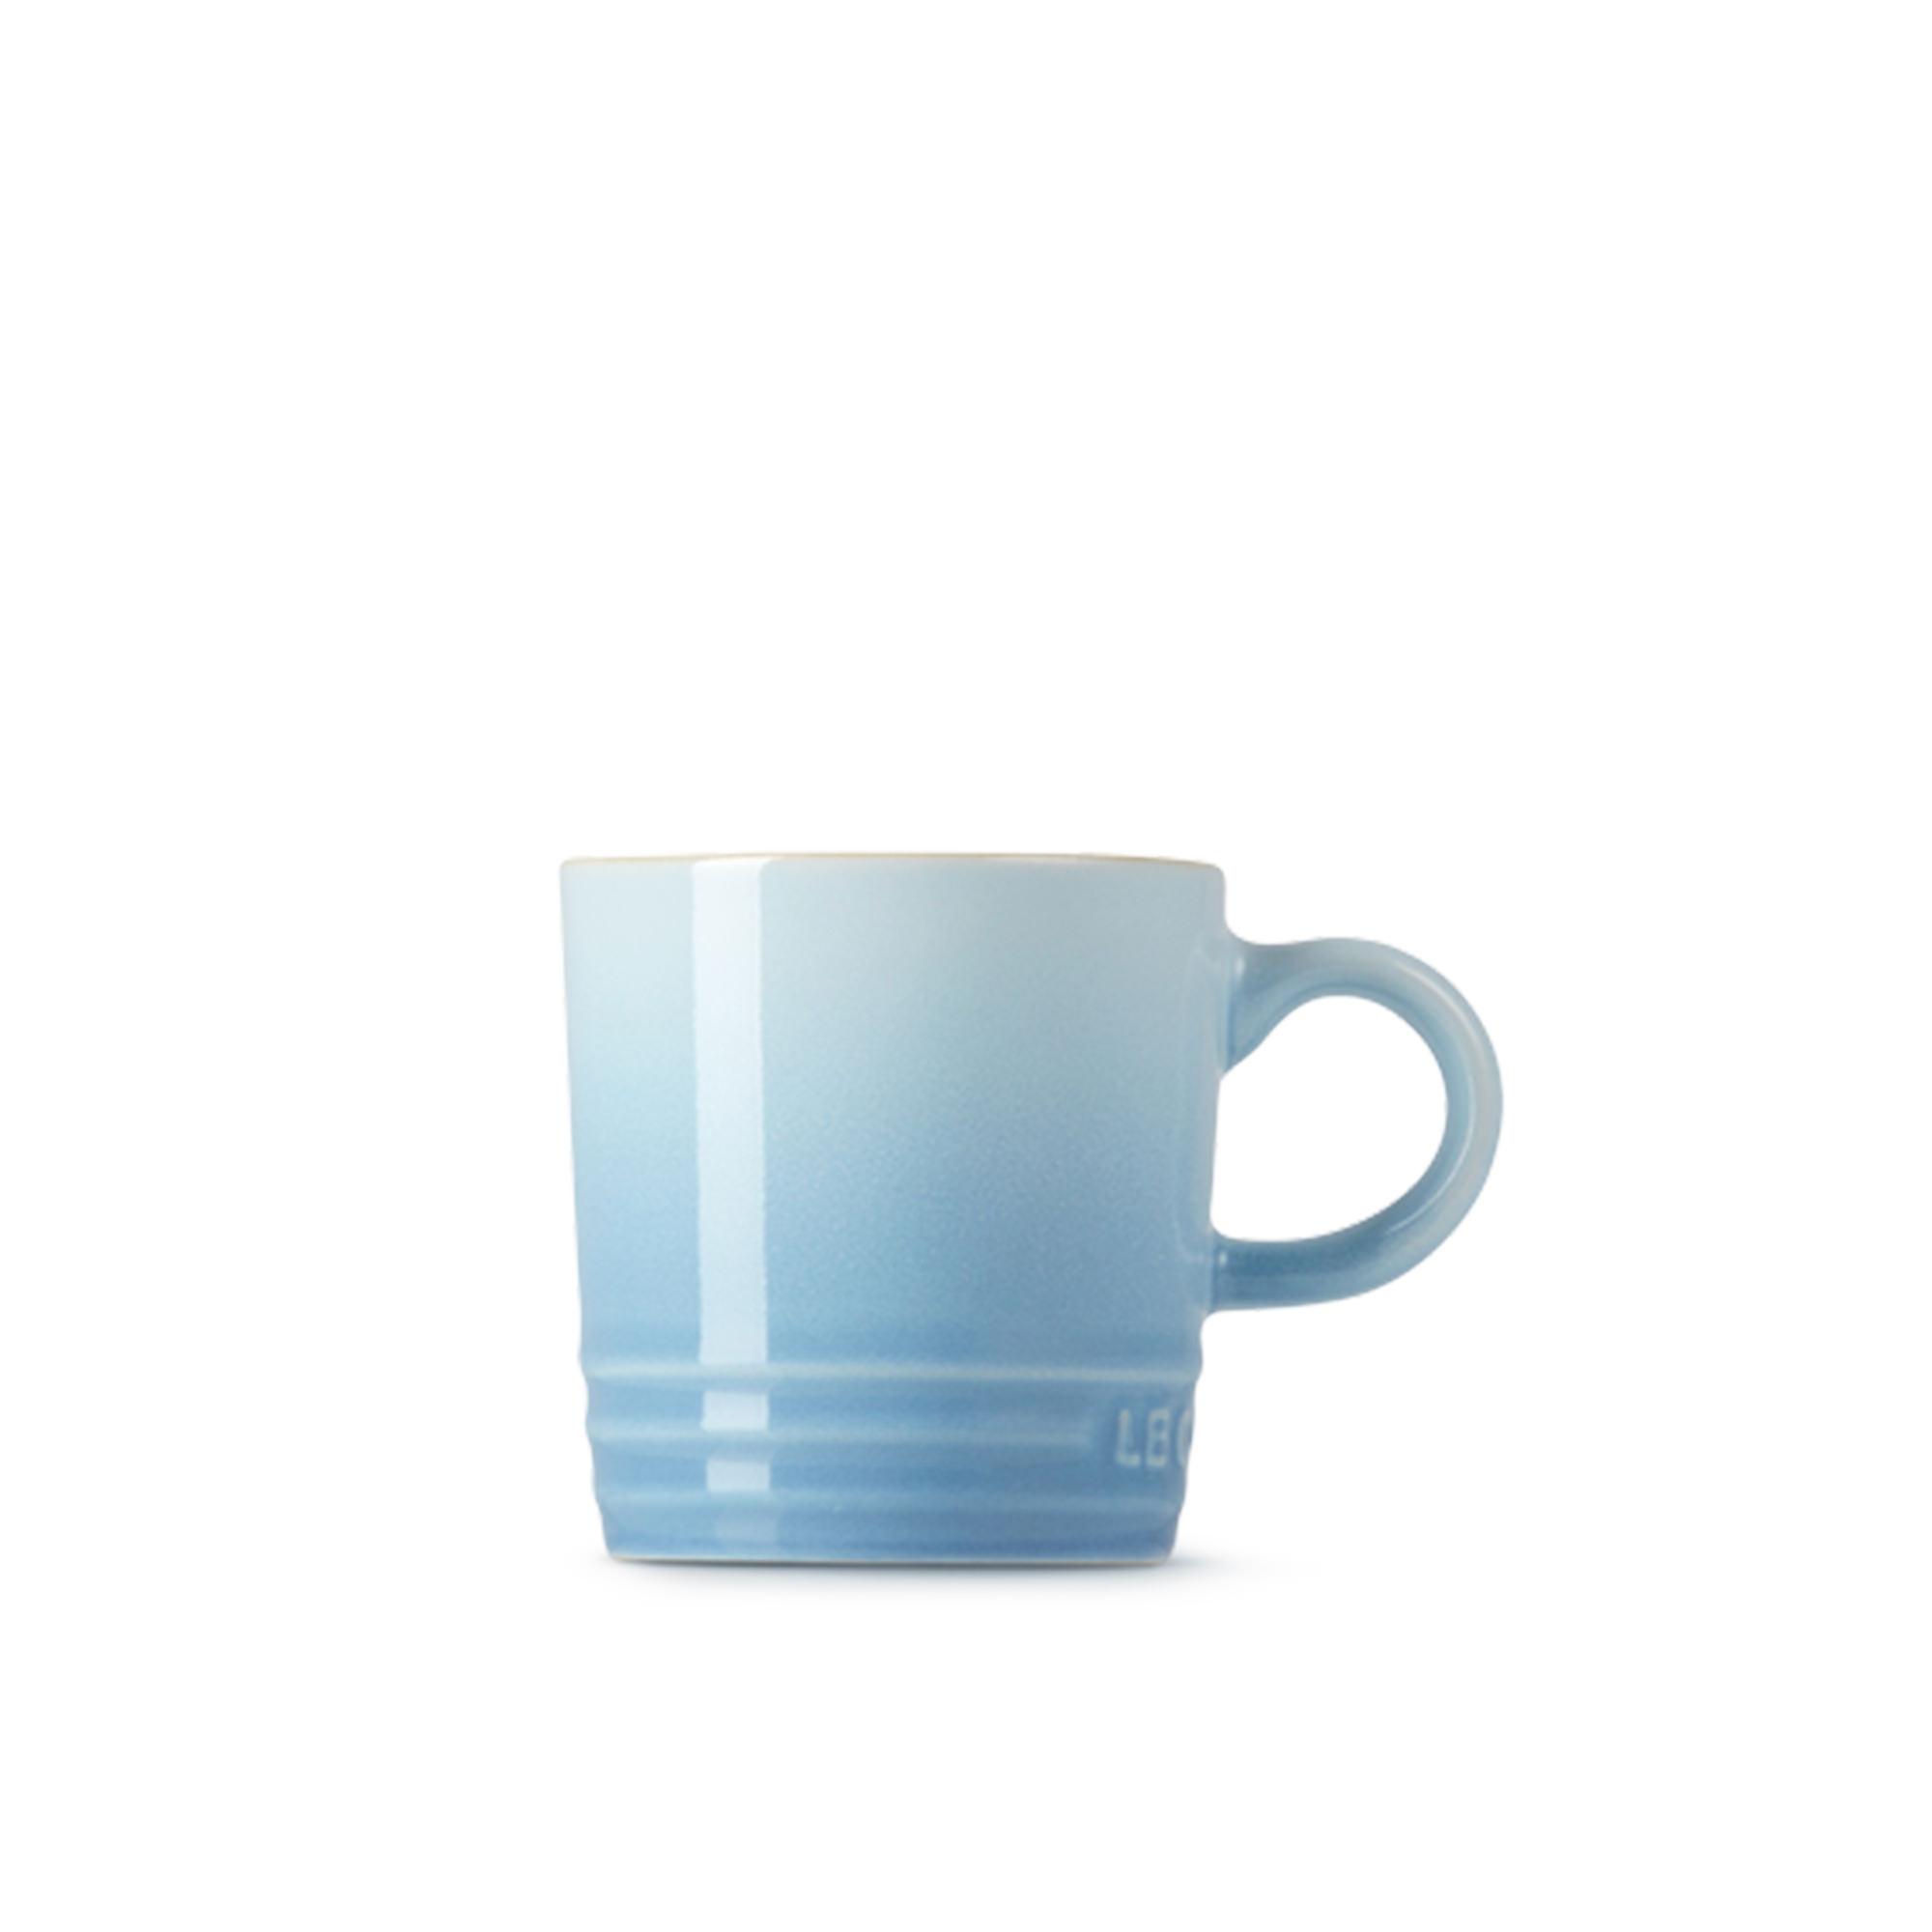 Le Creuset Stoneware Espresso Mug 100ml Coastal Blue Image 3